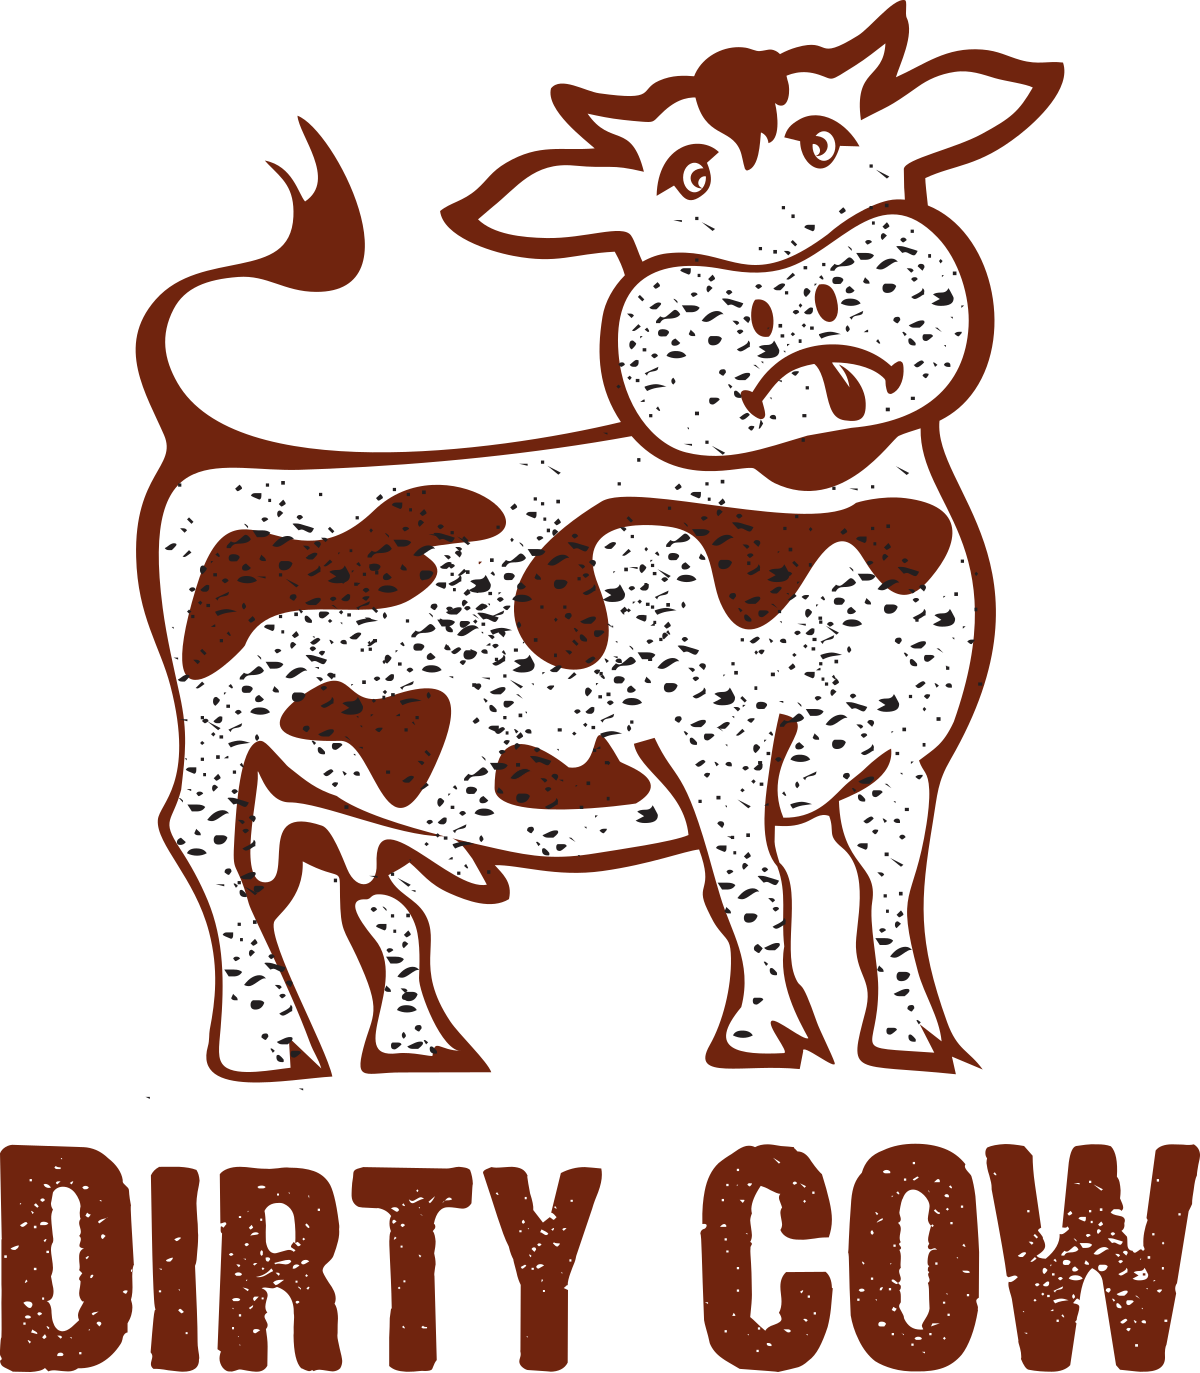 Dirty Cow Bug - thetechpapa.com